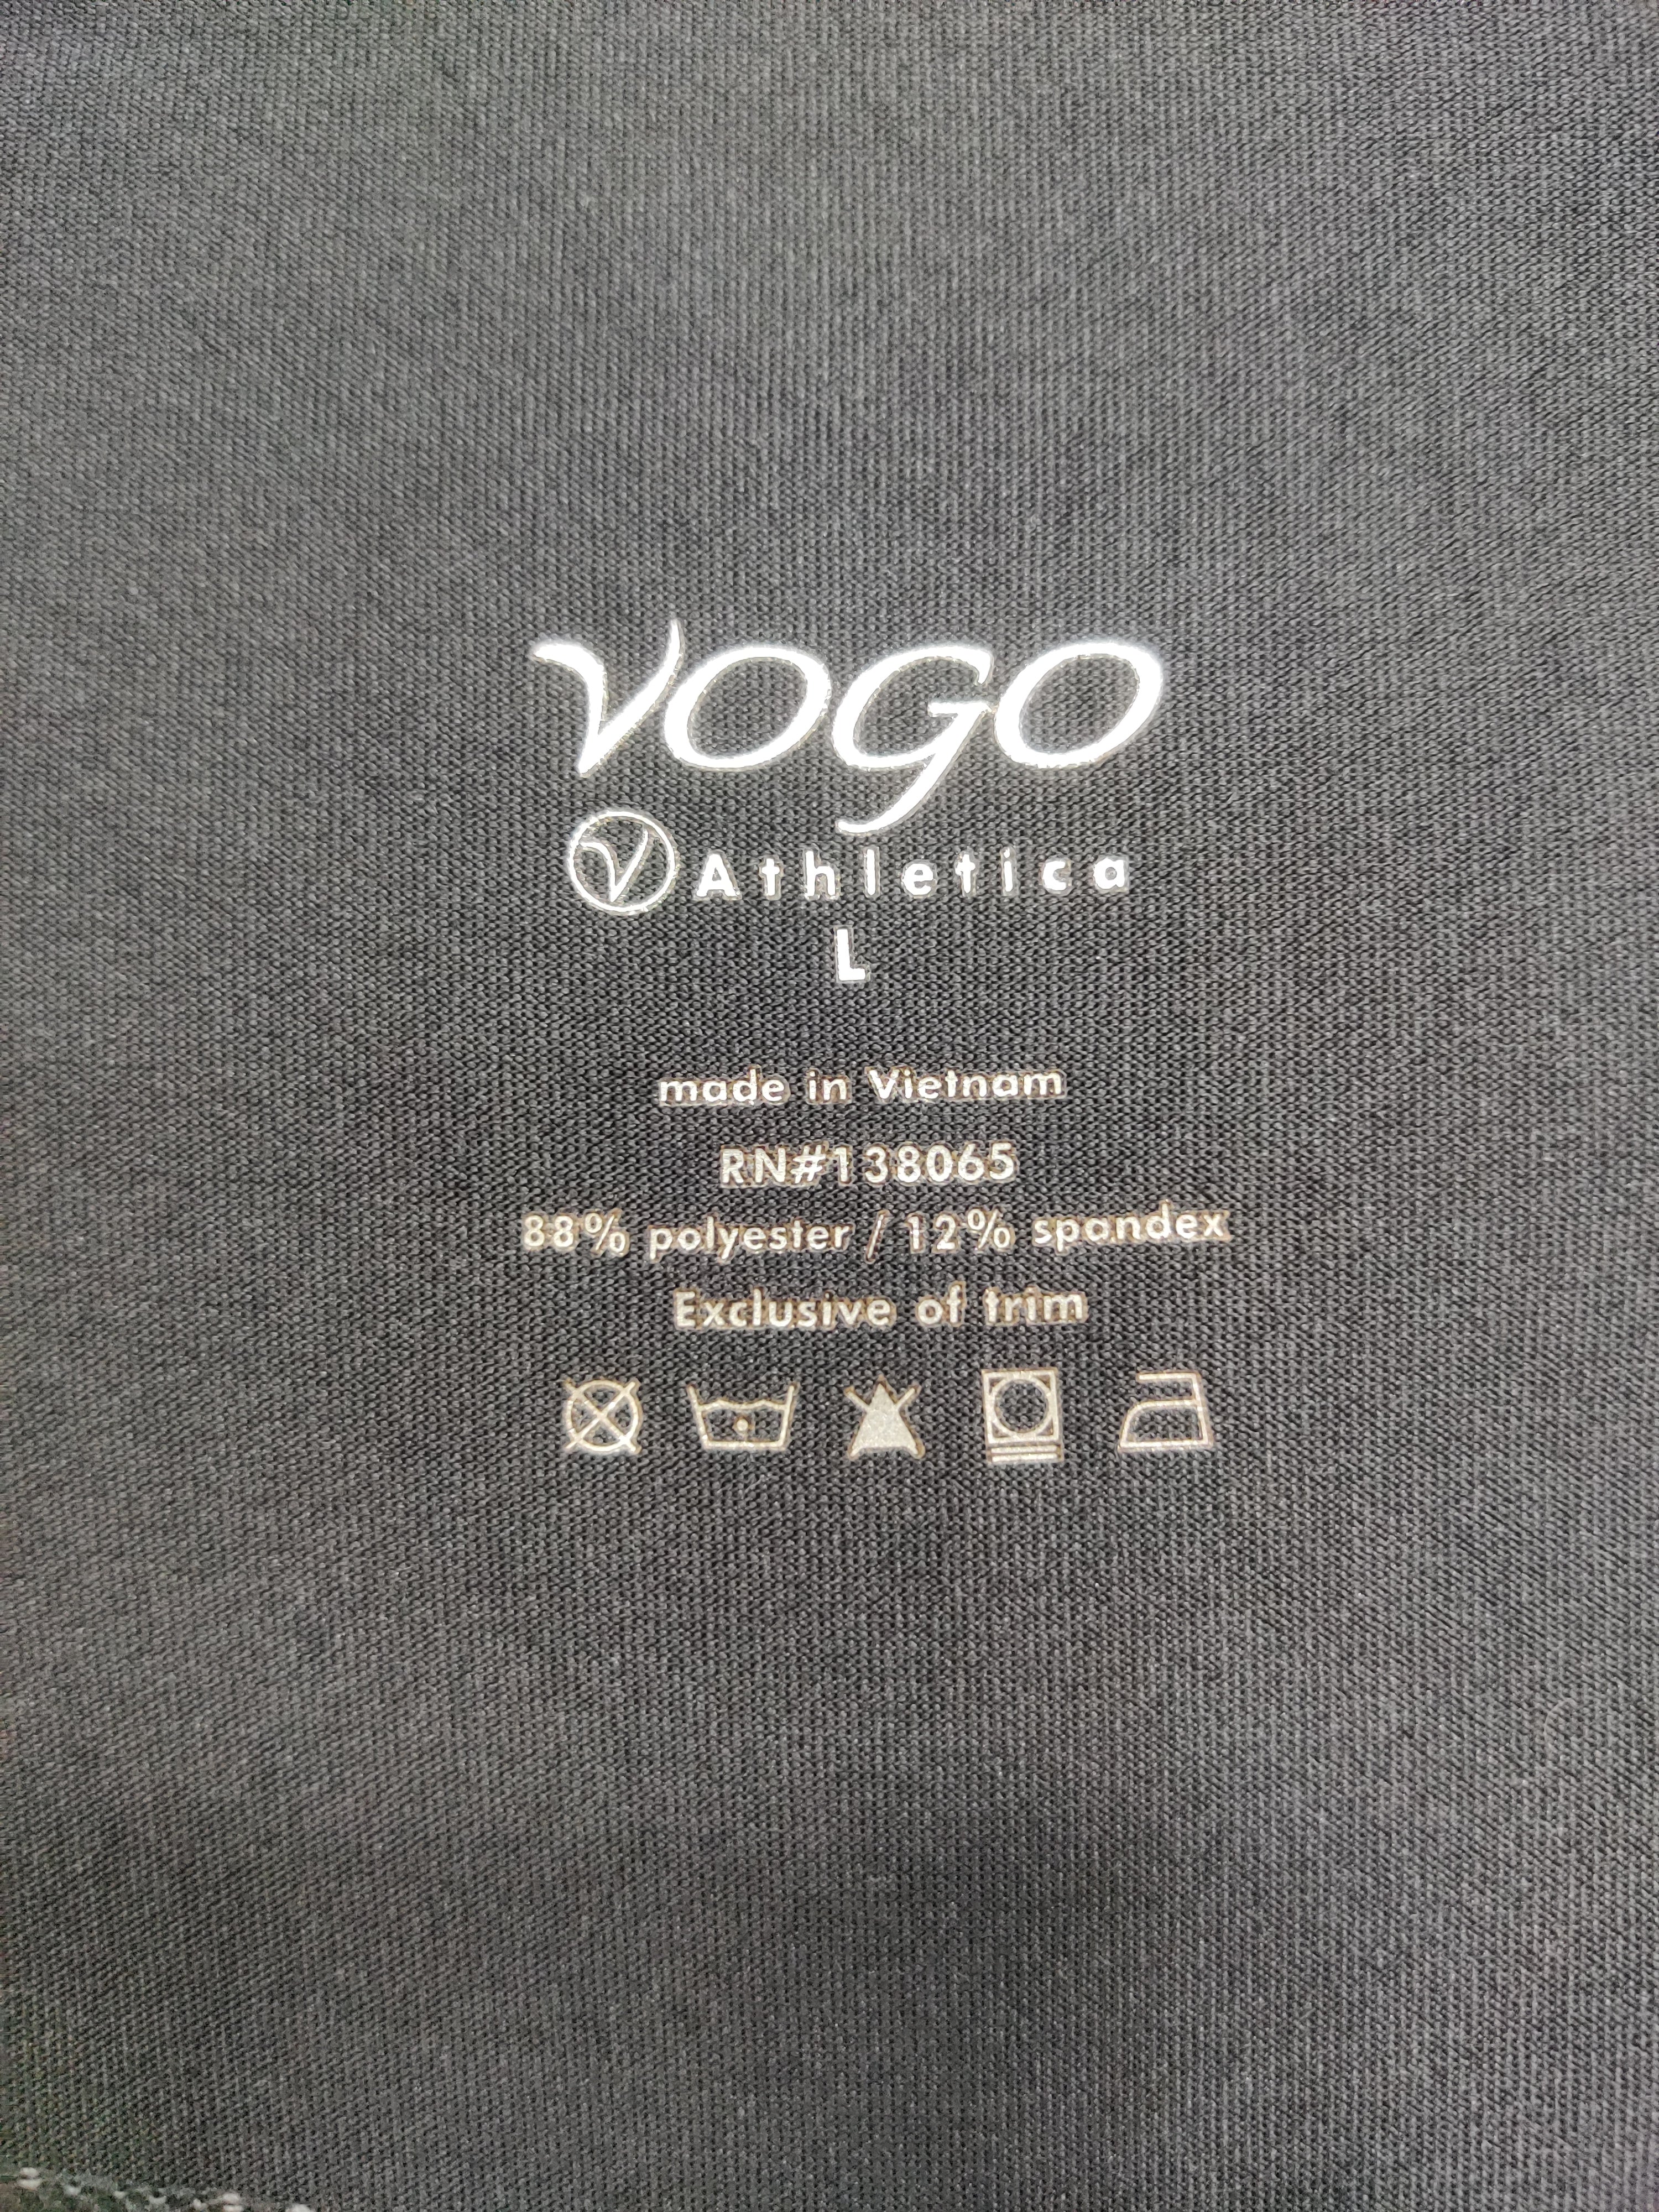 Vogo Athletica Branded Original Sports Stretch Gym tights For Women